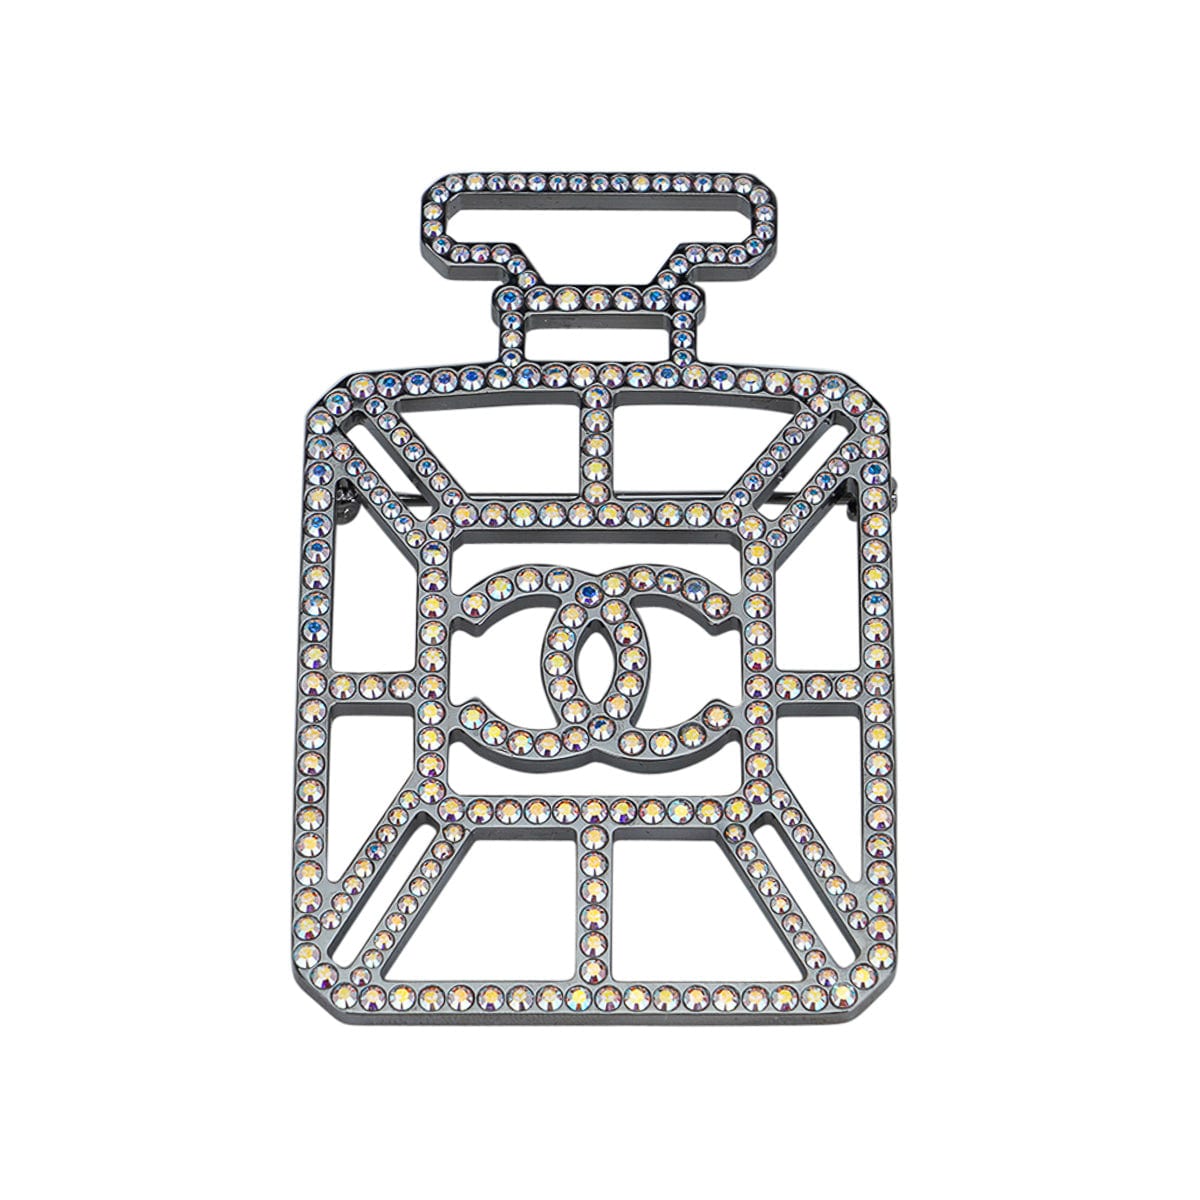 CHANEL, Jewelry, Chanel Cc Logos Turnlock Motif Brooch Pin Corsage  Goldtone 96a Vintage Ak3833c